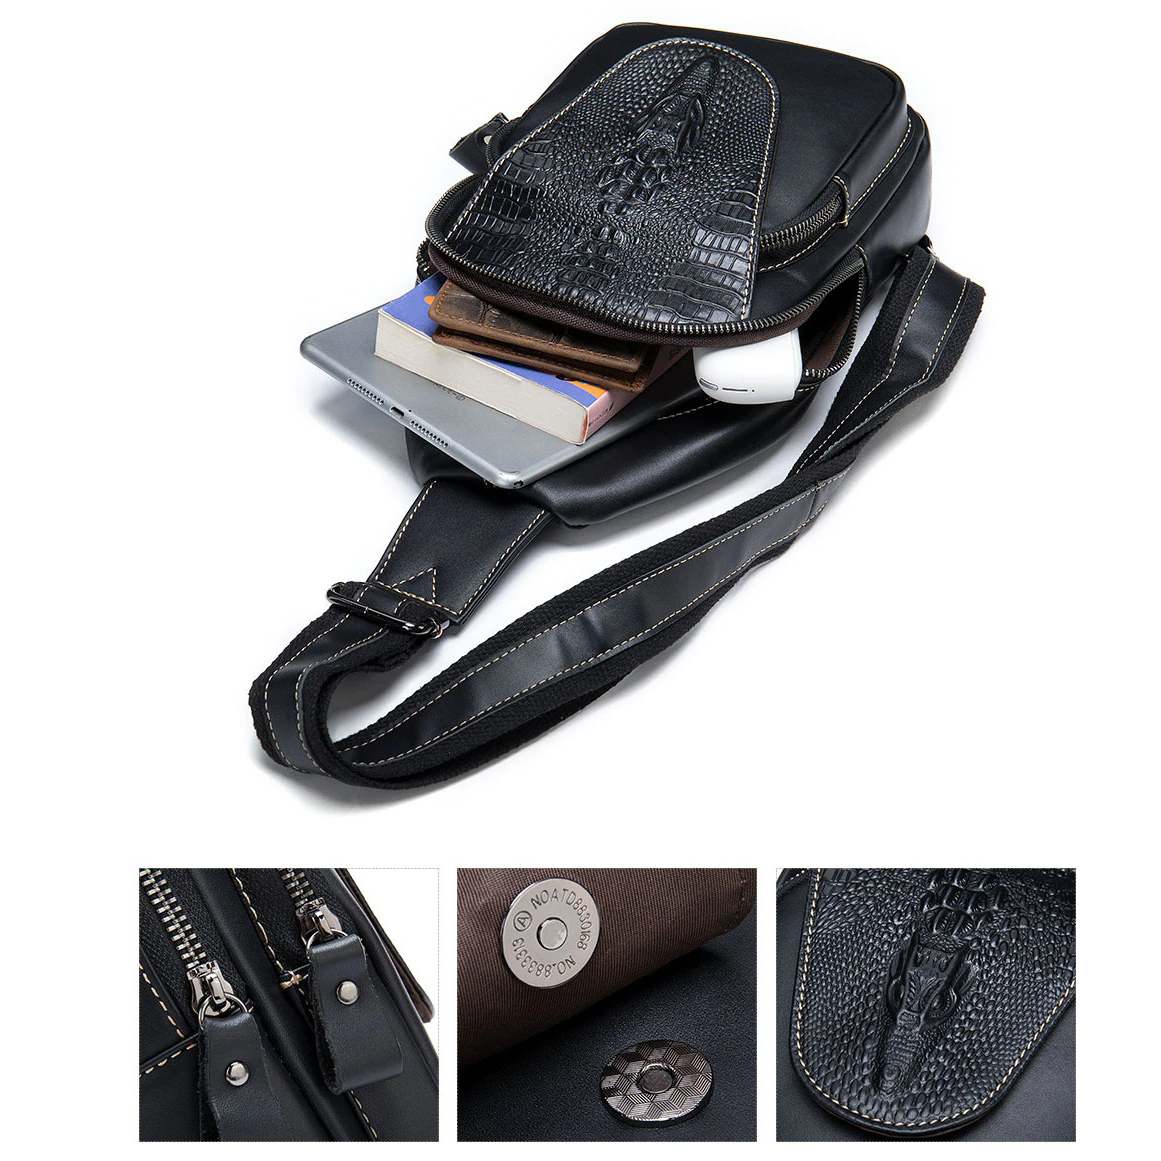 Genuine Leather Zipper Men's Bag / Male Pattern Crocodile Chest Bags / Luxury Accessories - HARD'N'HEAVY